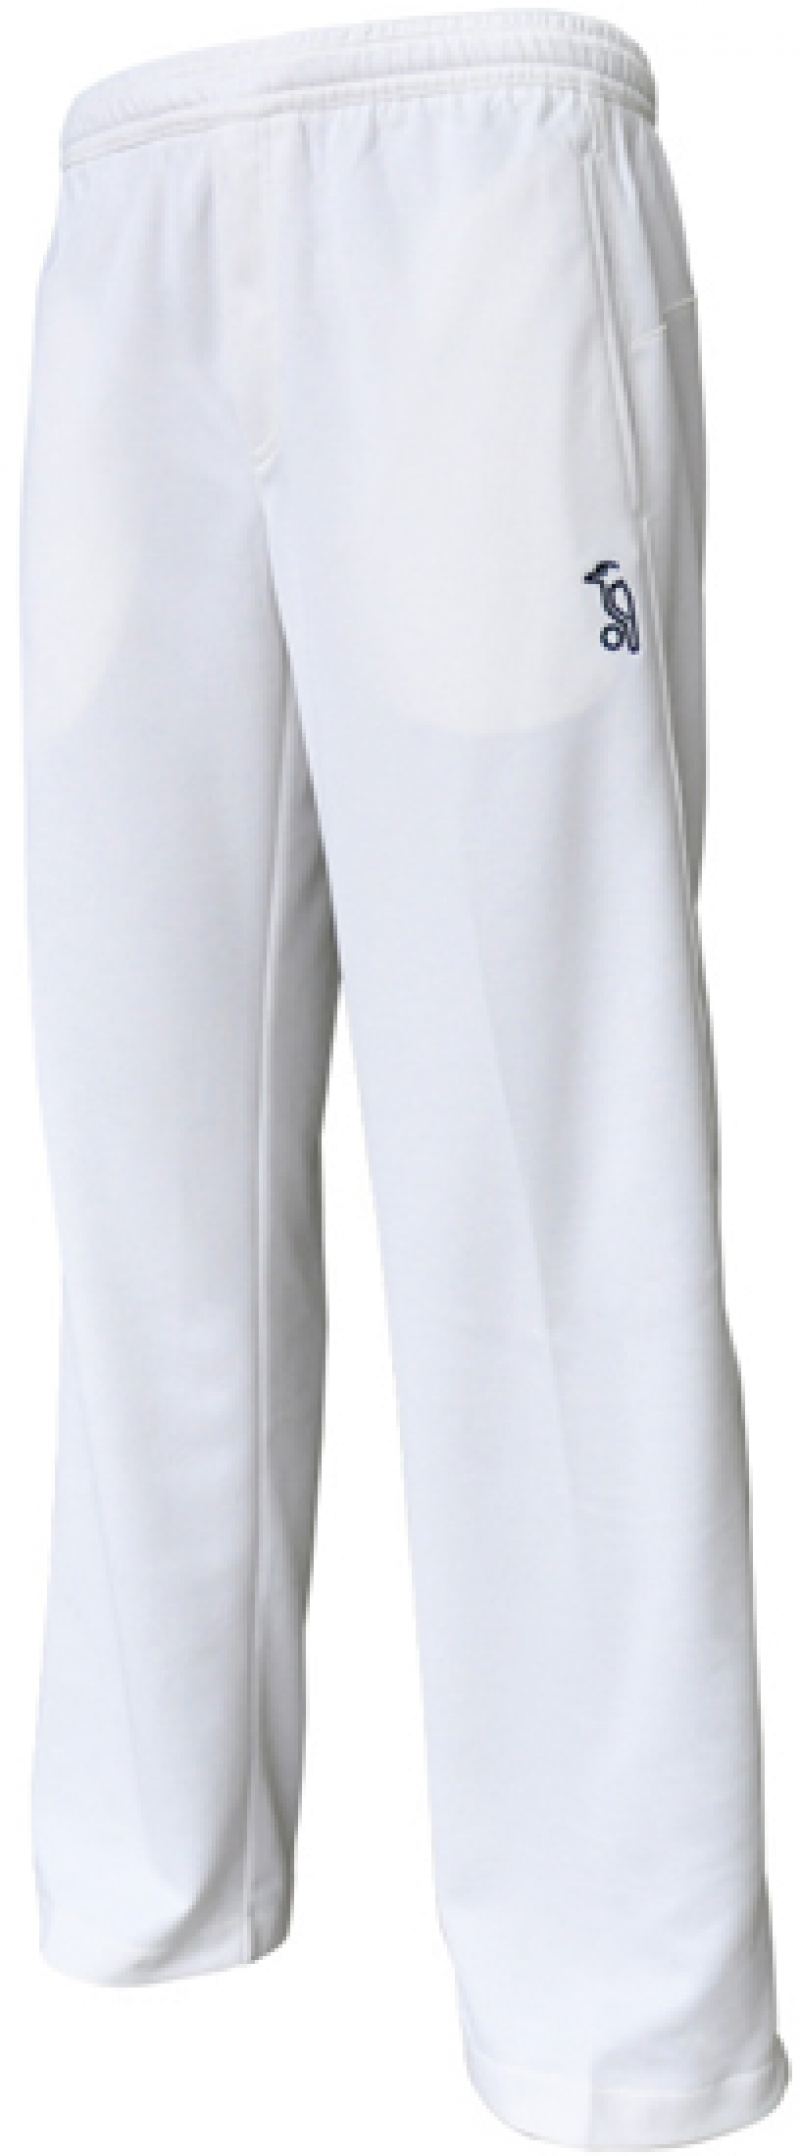 Kookaburra Pro Players Trouser (Adult Sizes)